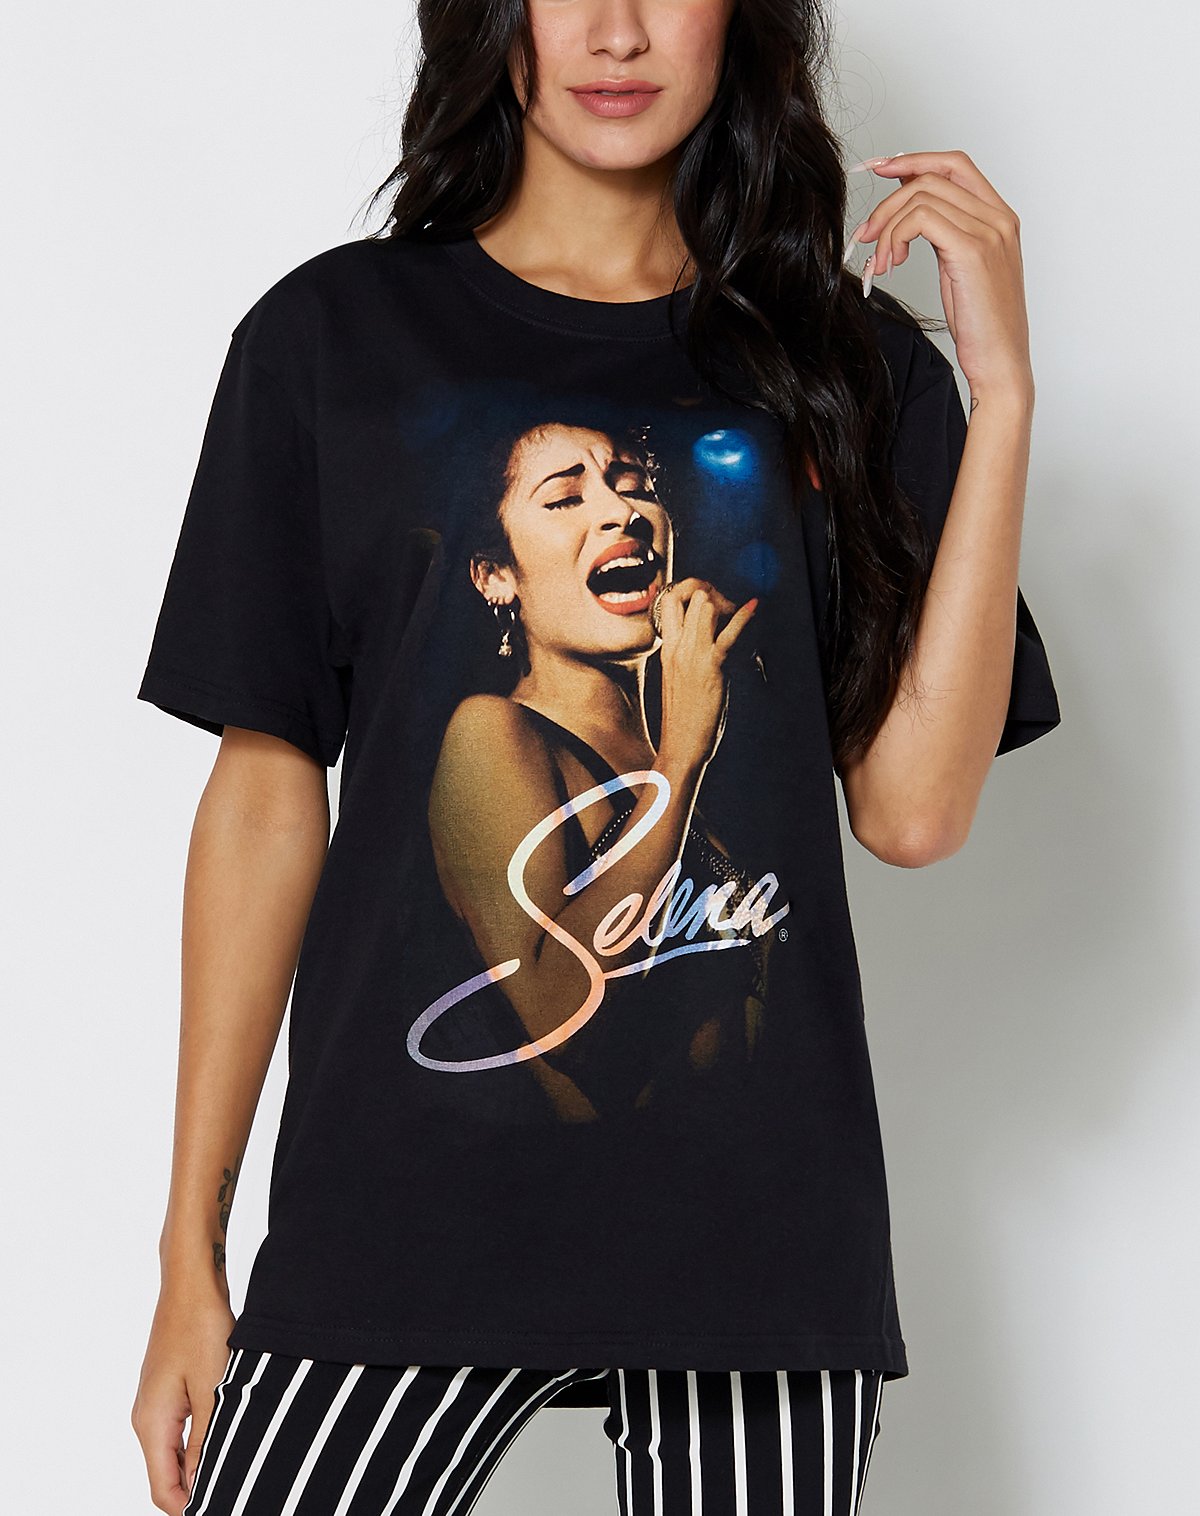 Singing Selena T Shirt 